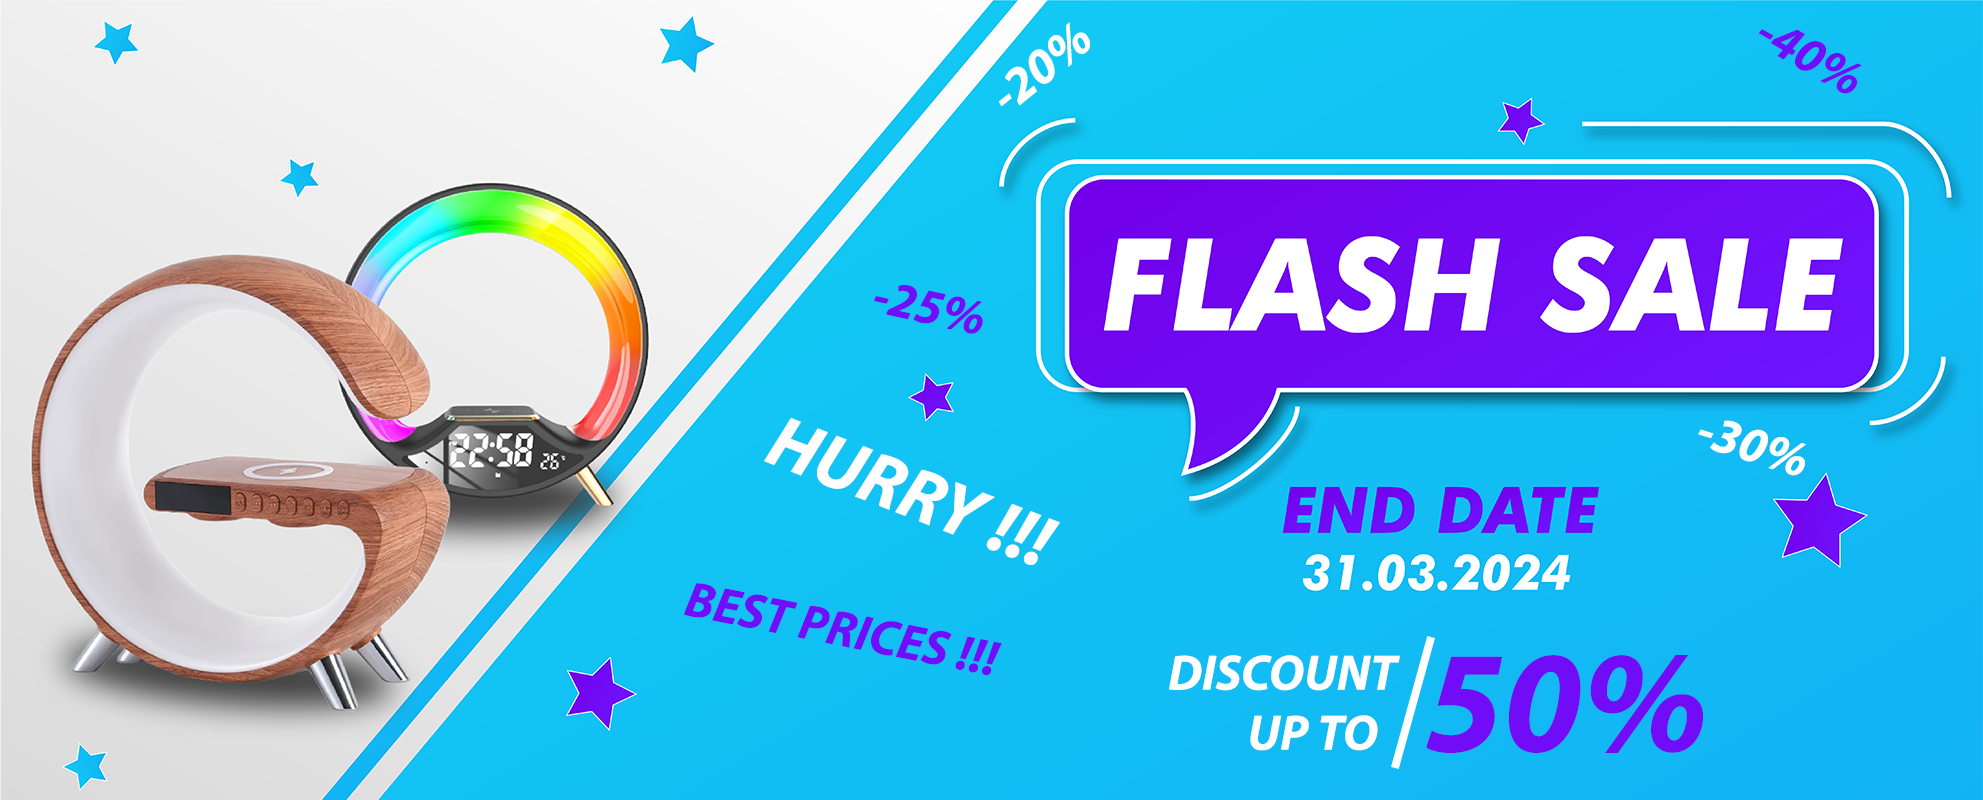 flash sale best prices 50% discount